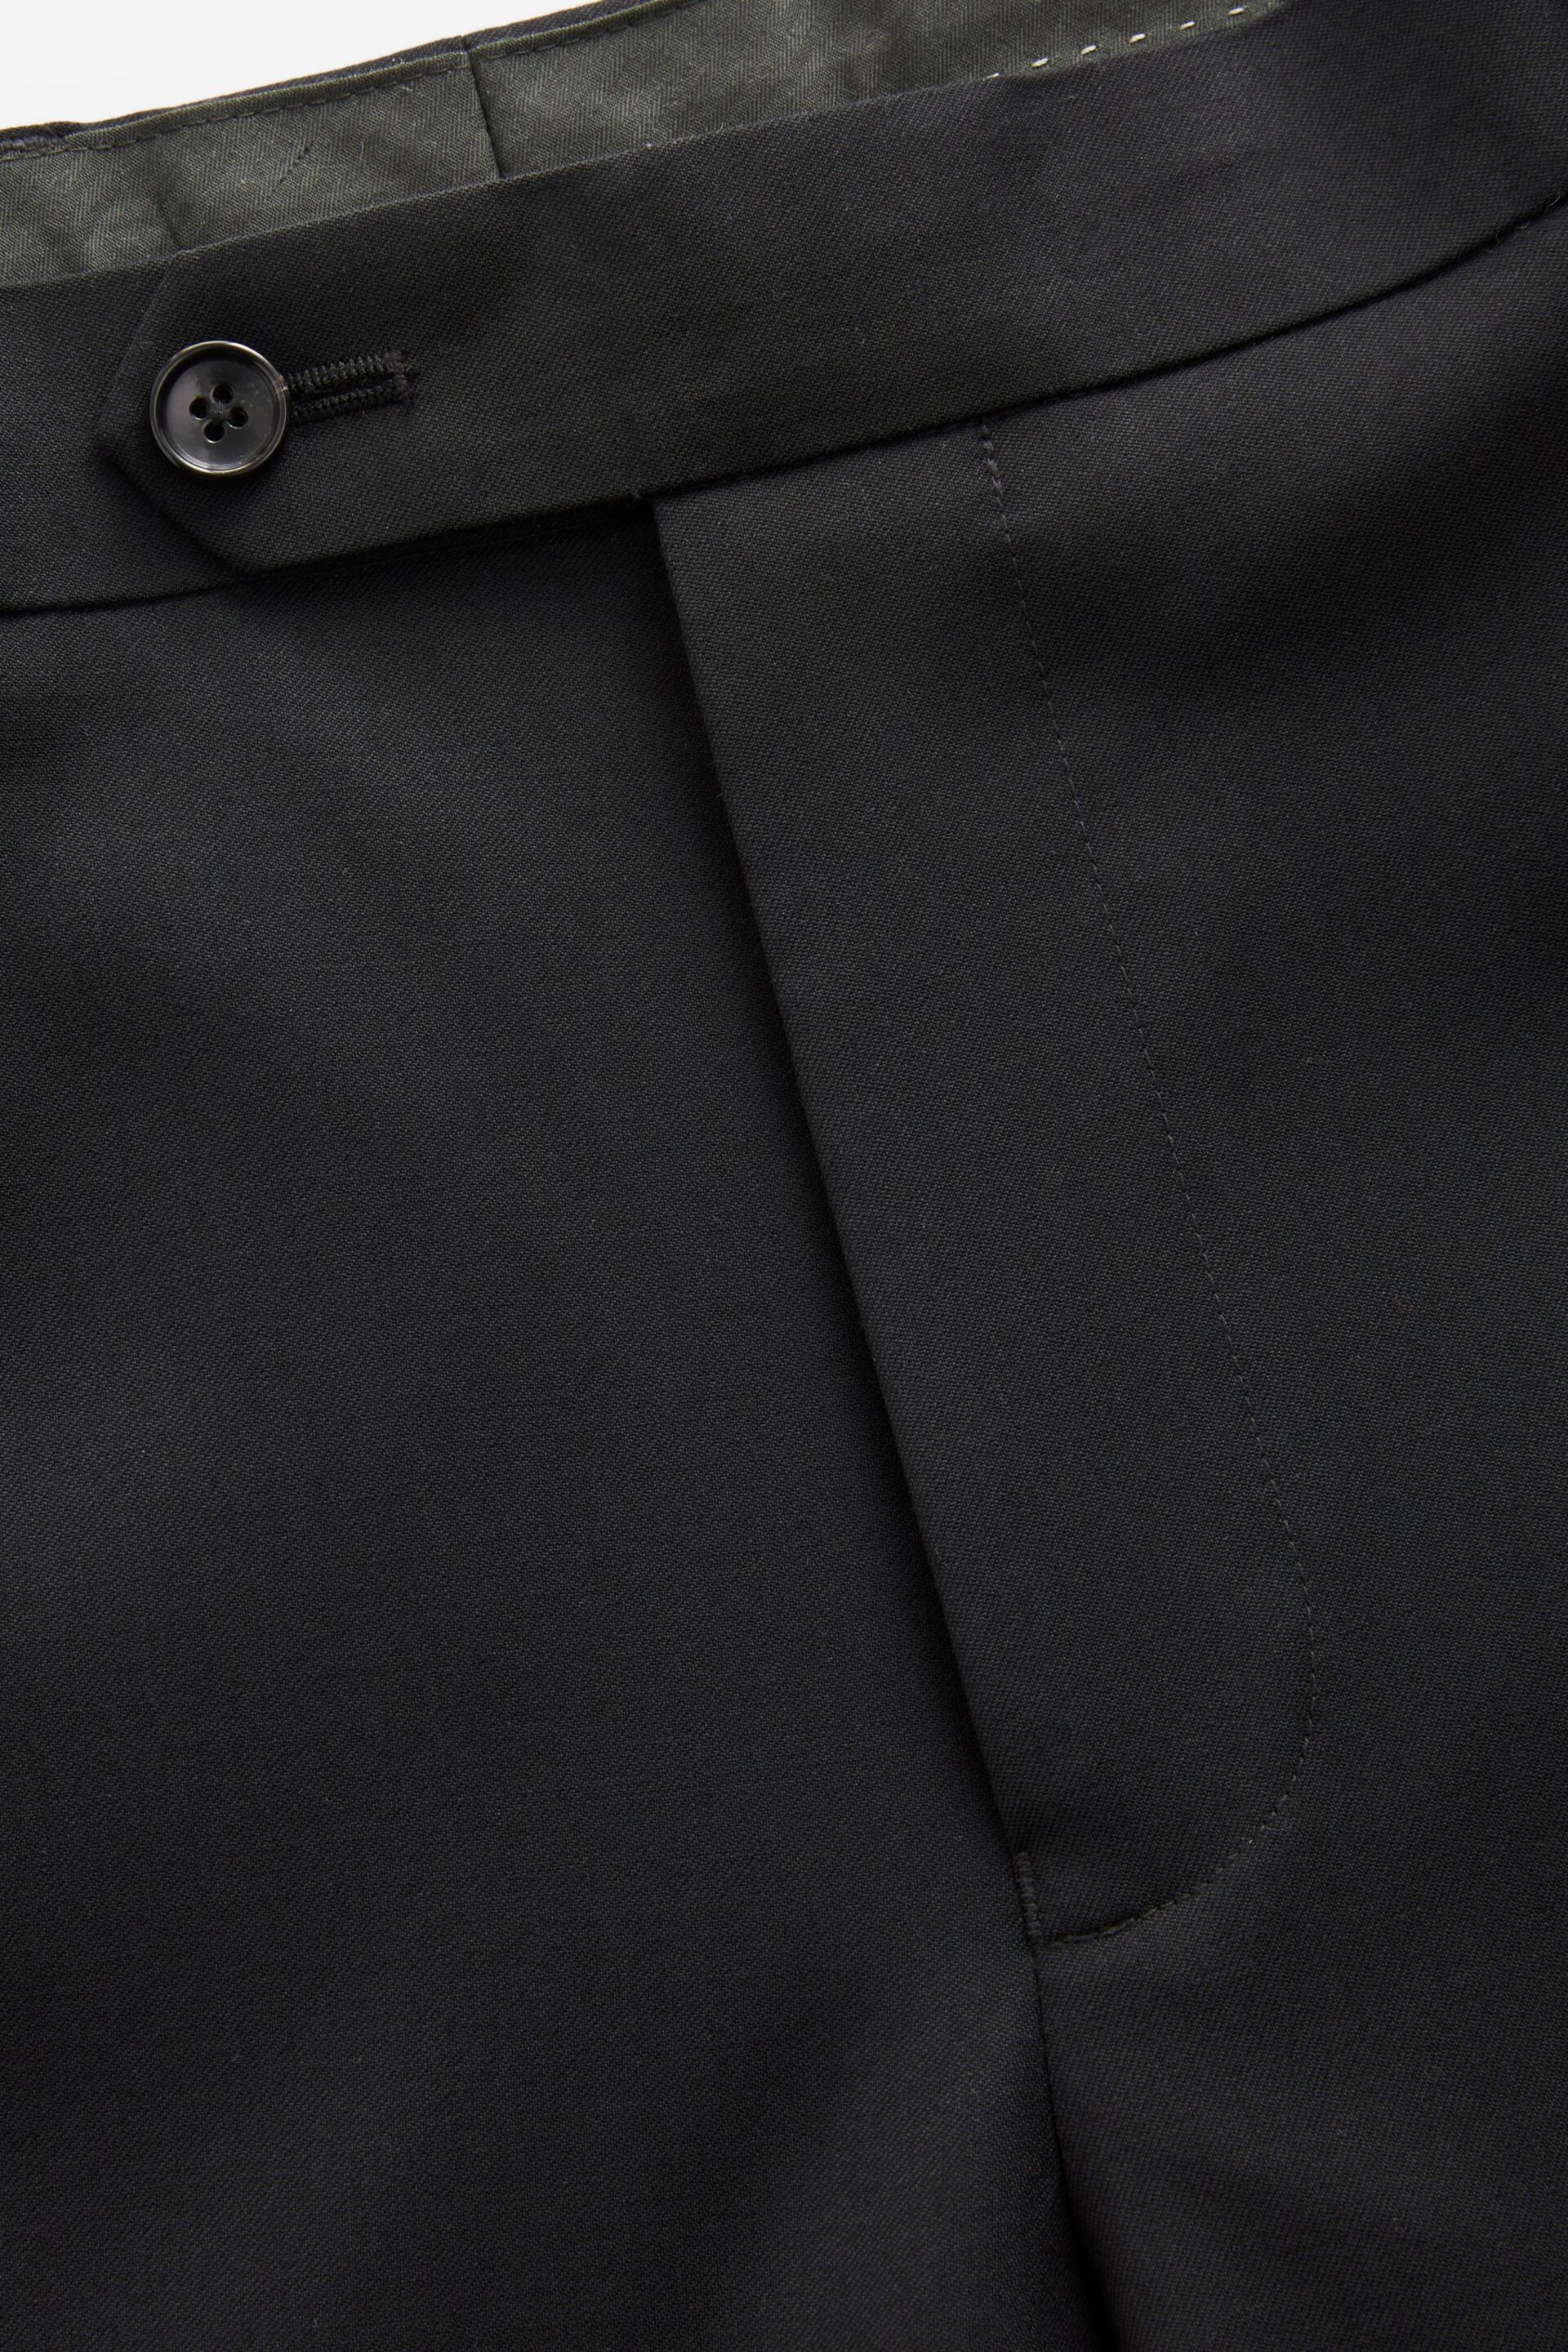 Black Slim Fit Signature Wool Suit: Trousers - Image 6 of 9